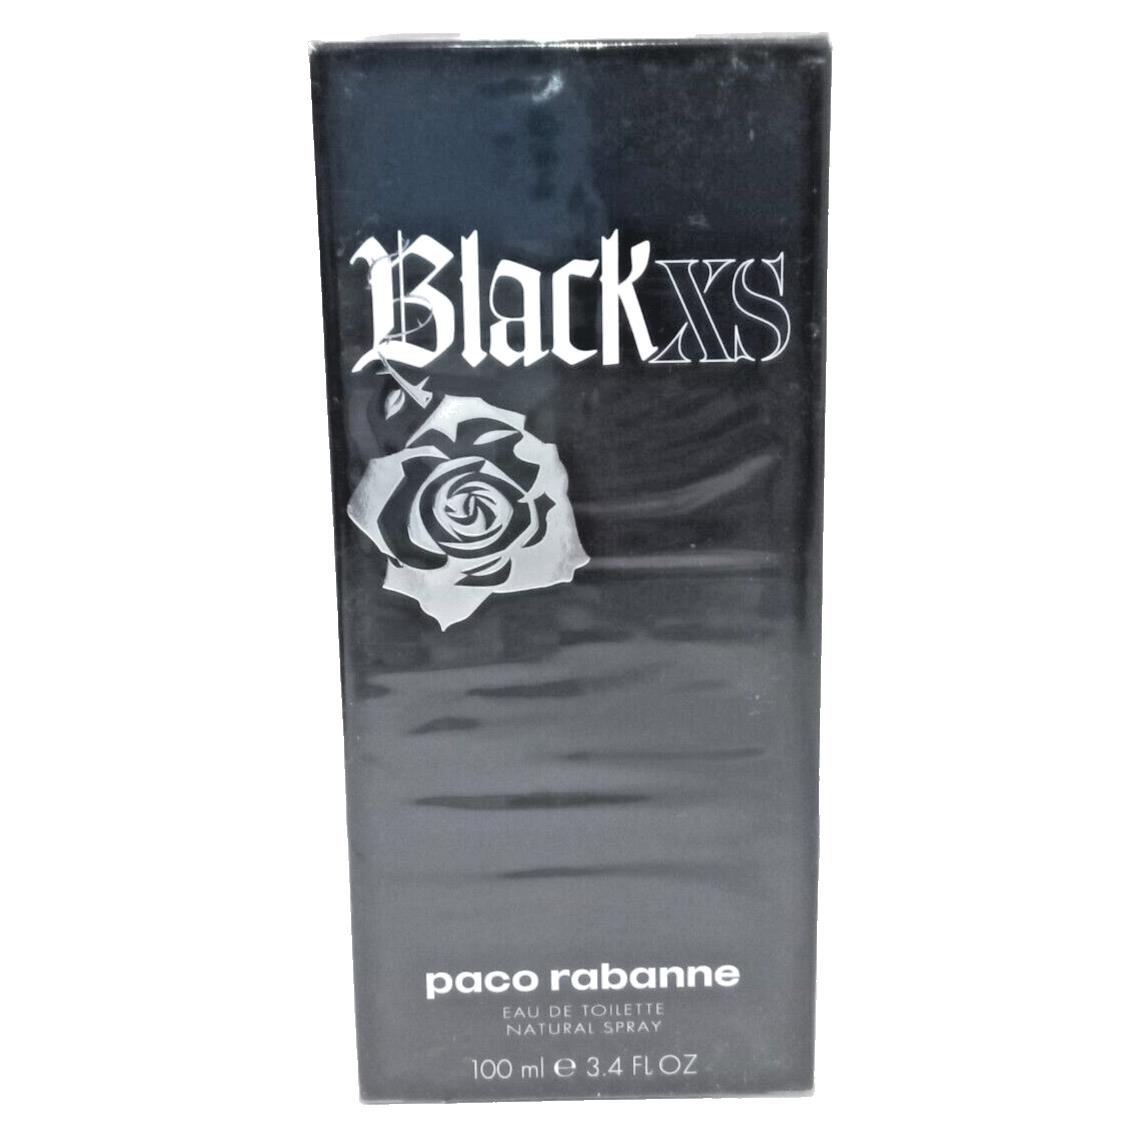 Black XS For Men By Paco Rabanne Eau de Toilette Spray 3.4 fl oz